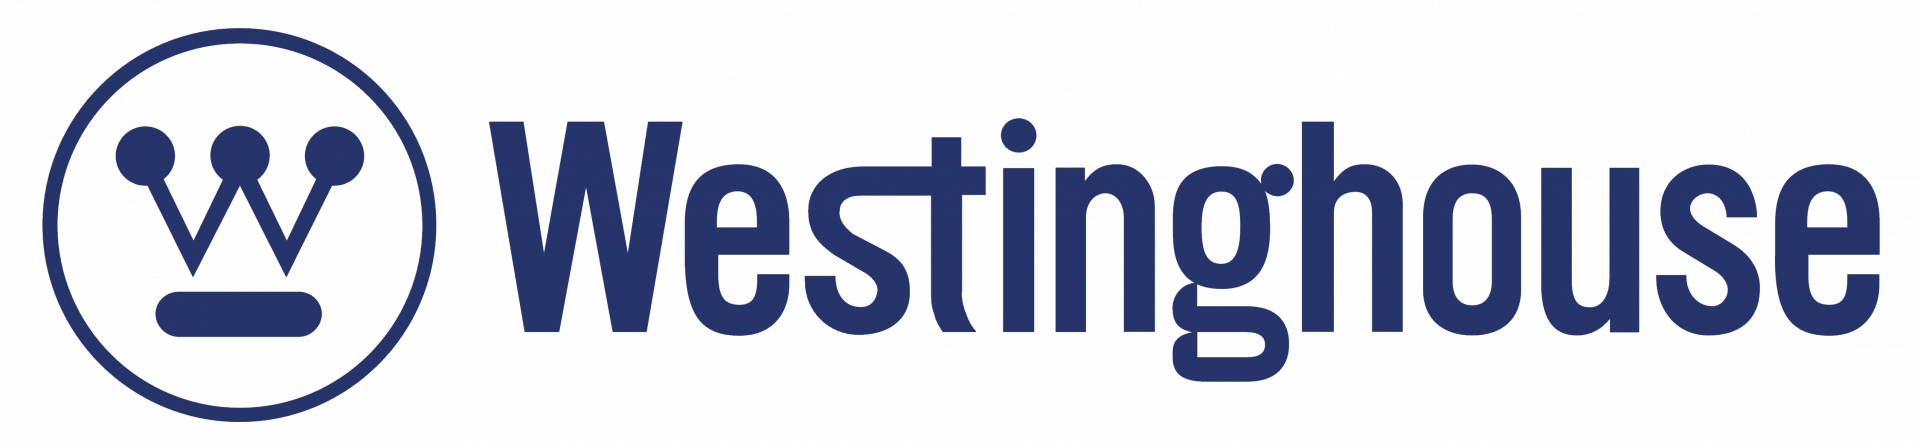 Westinghouse Electric Co. LLC logo